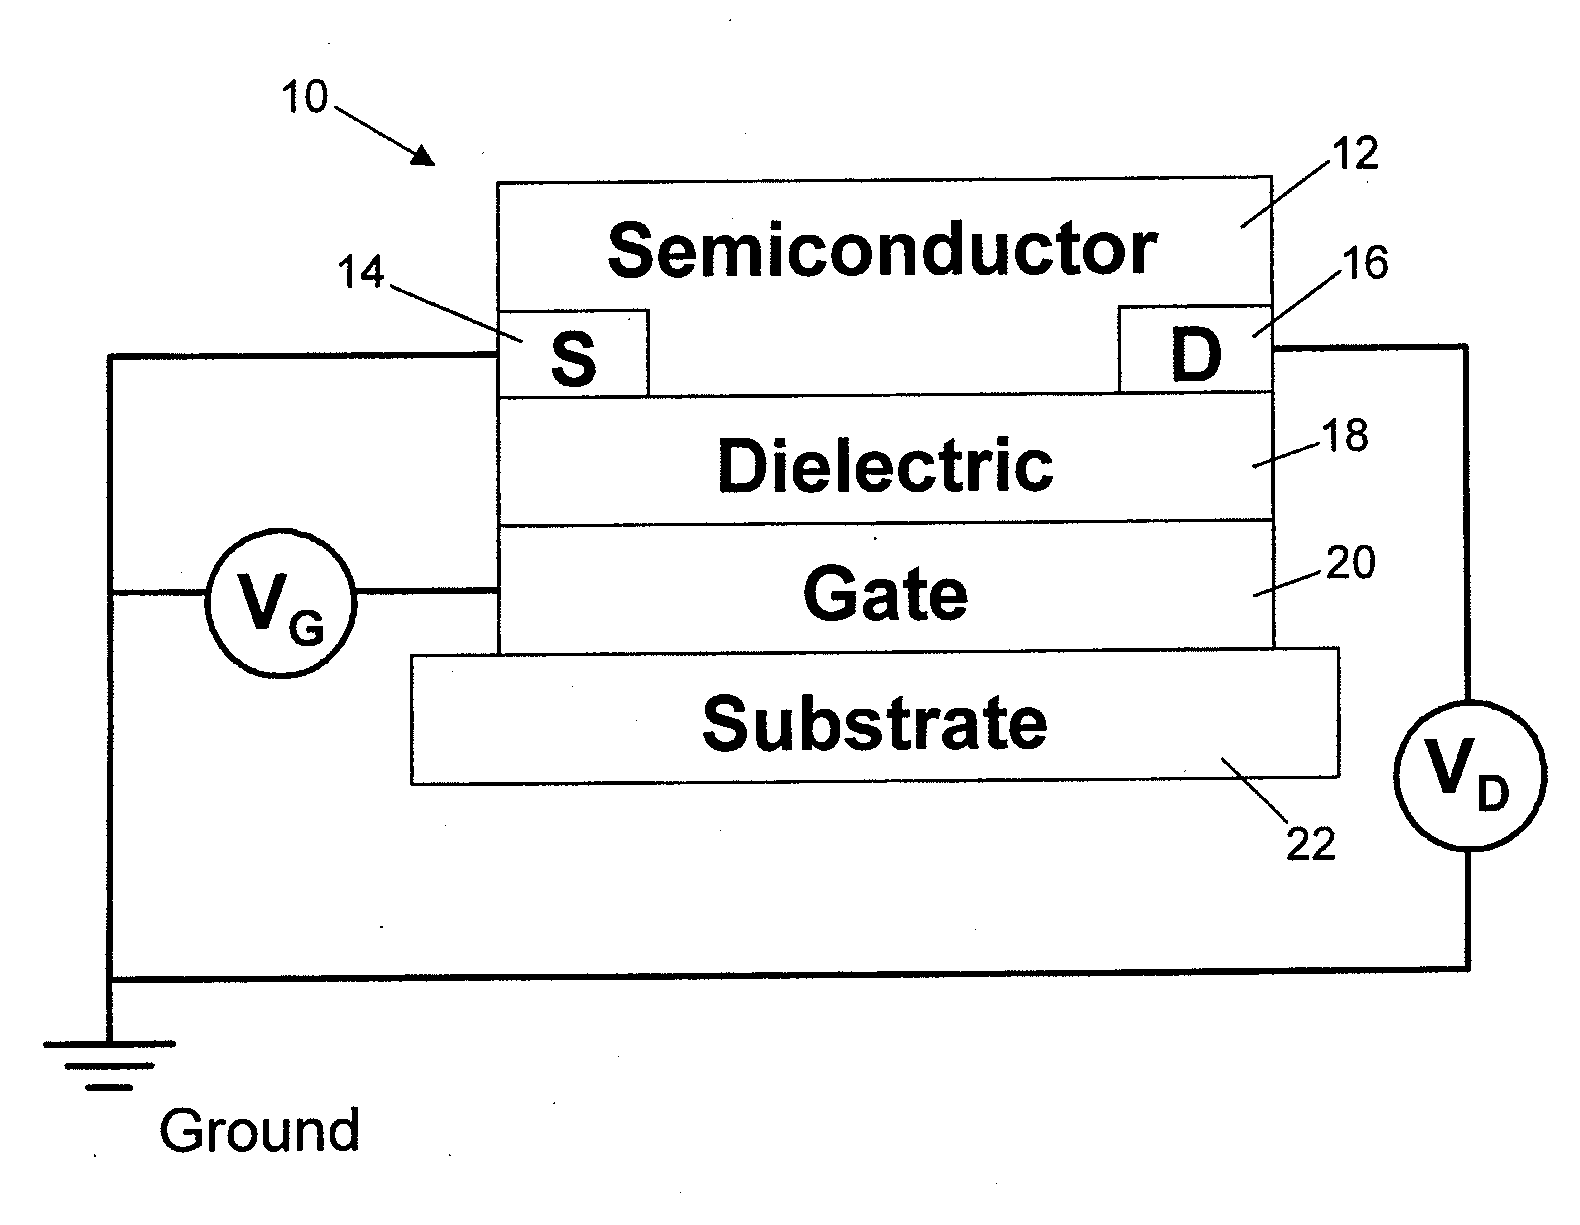 Low-voltage thin-film field-effect transistors